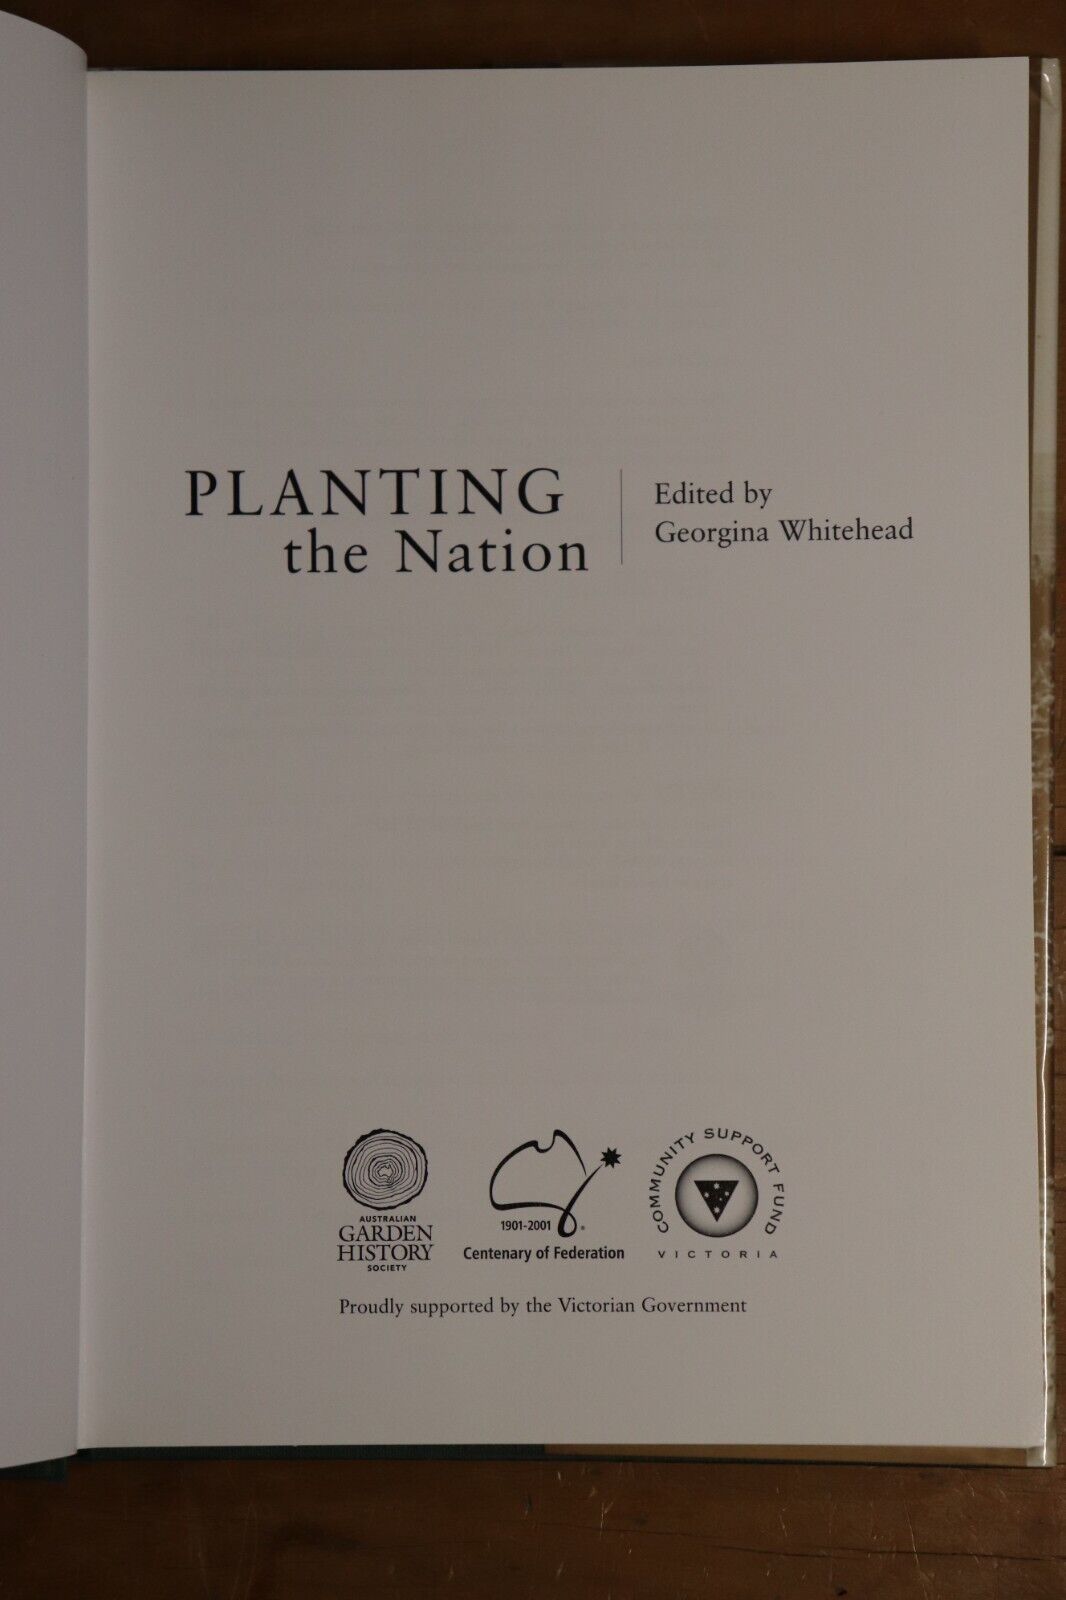 Planting the Nation - 2001 - 1st Edition Australian History & Gardening Book